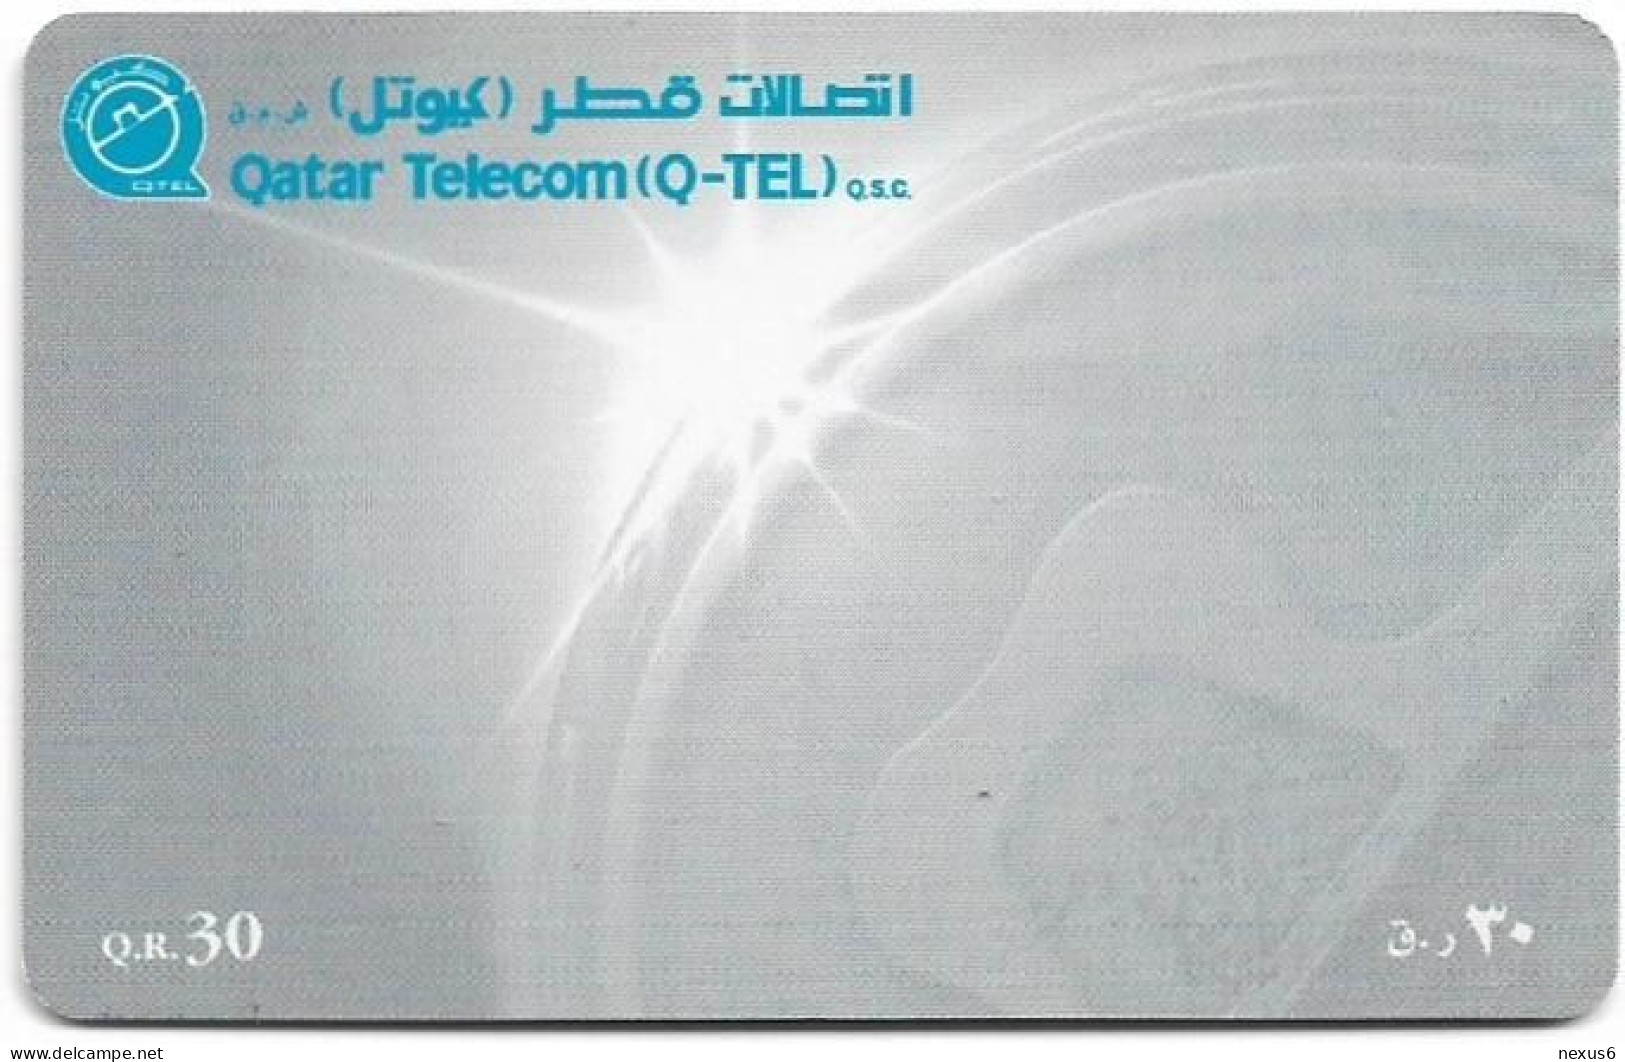 Qatar - Qatar Telecom (Chip) - Abstract Design 1 - Blue Arrow, 2002, 30QR, Used - Qatar